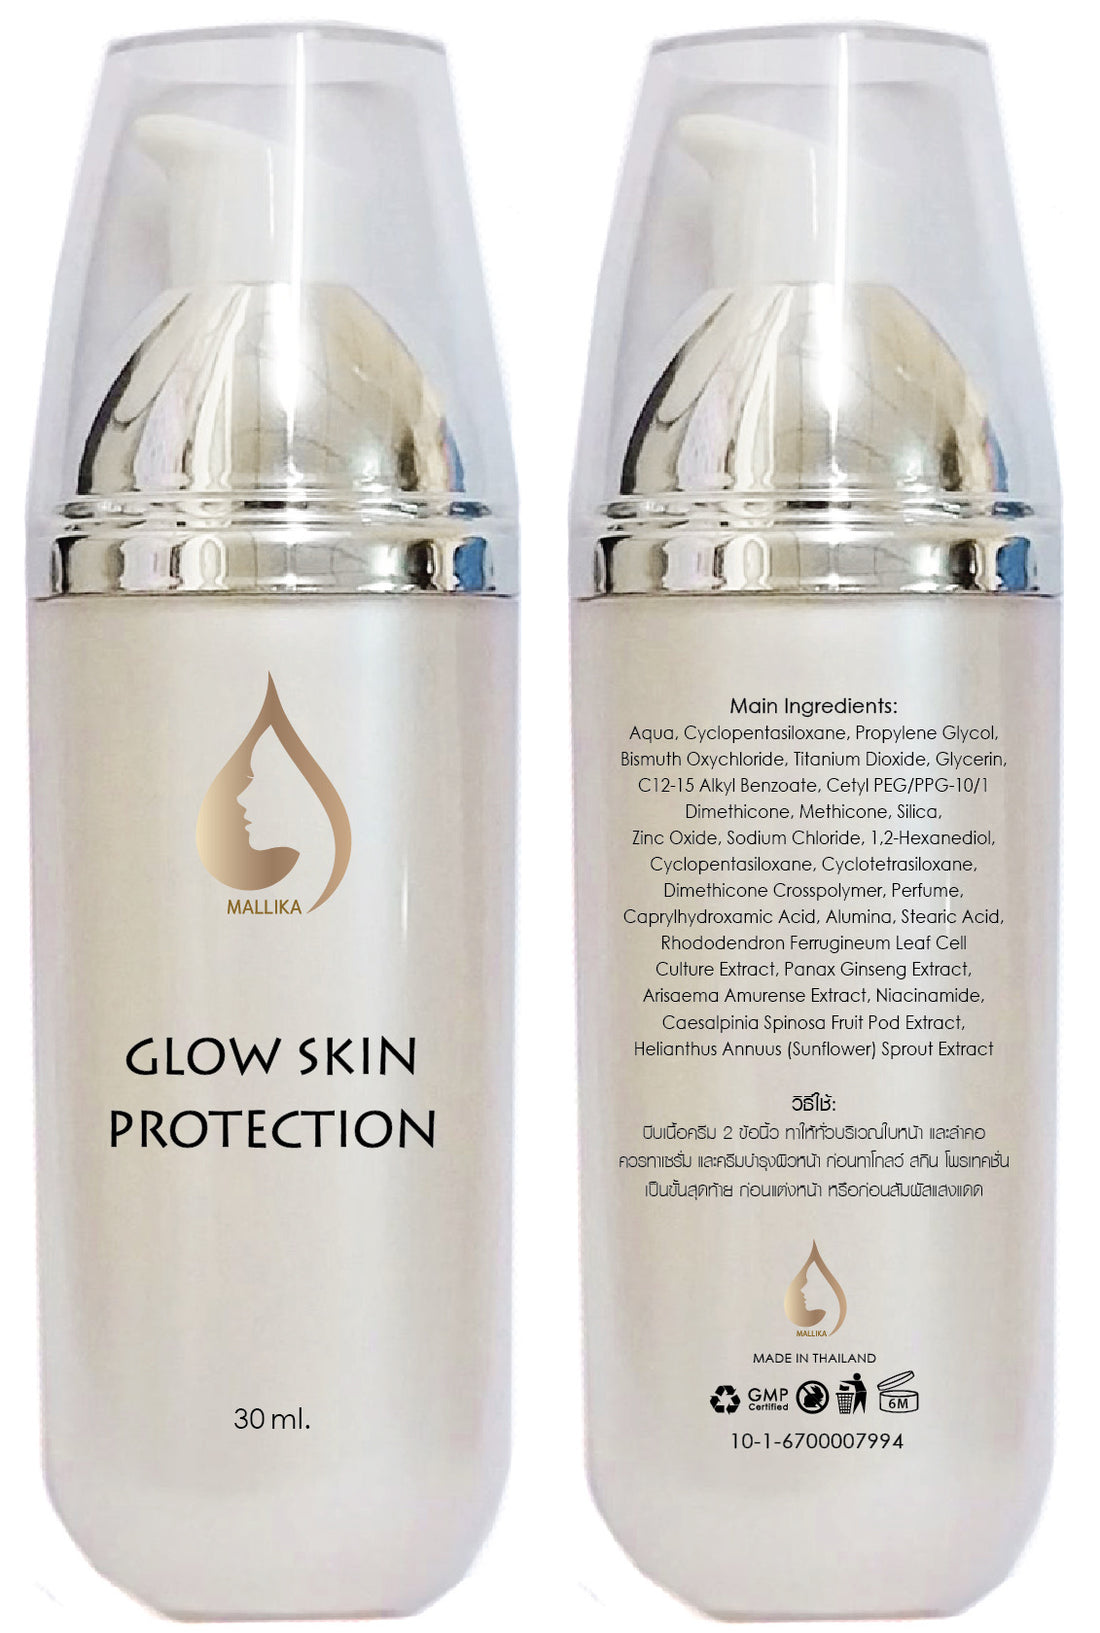 Mallika Glow Skin Protection spf50 pa+++